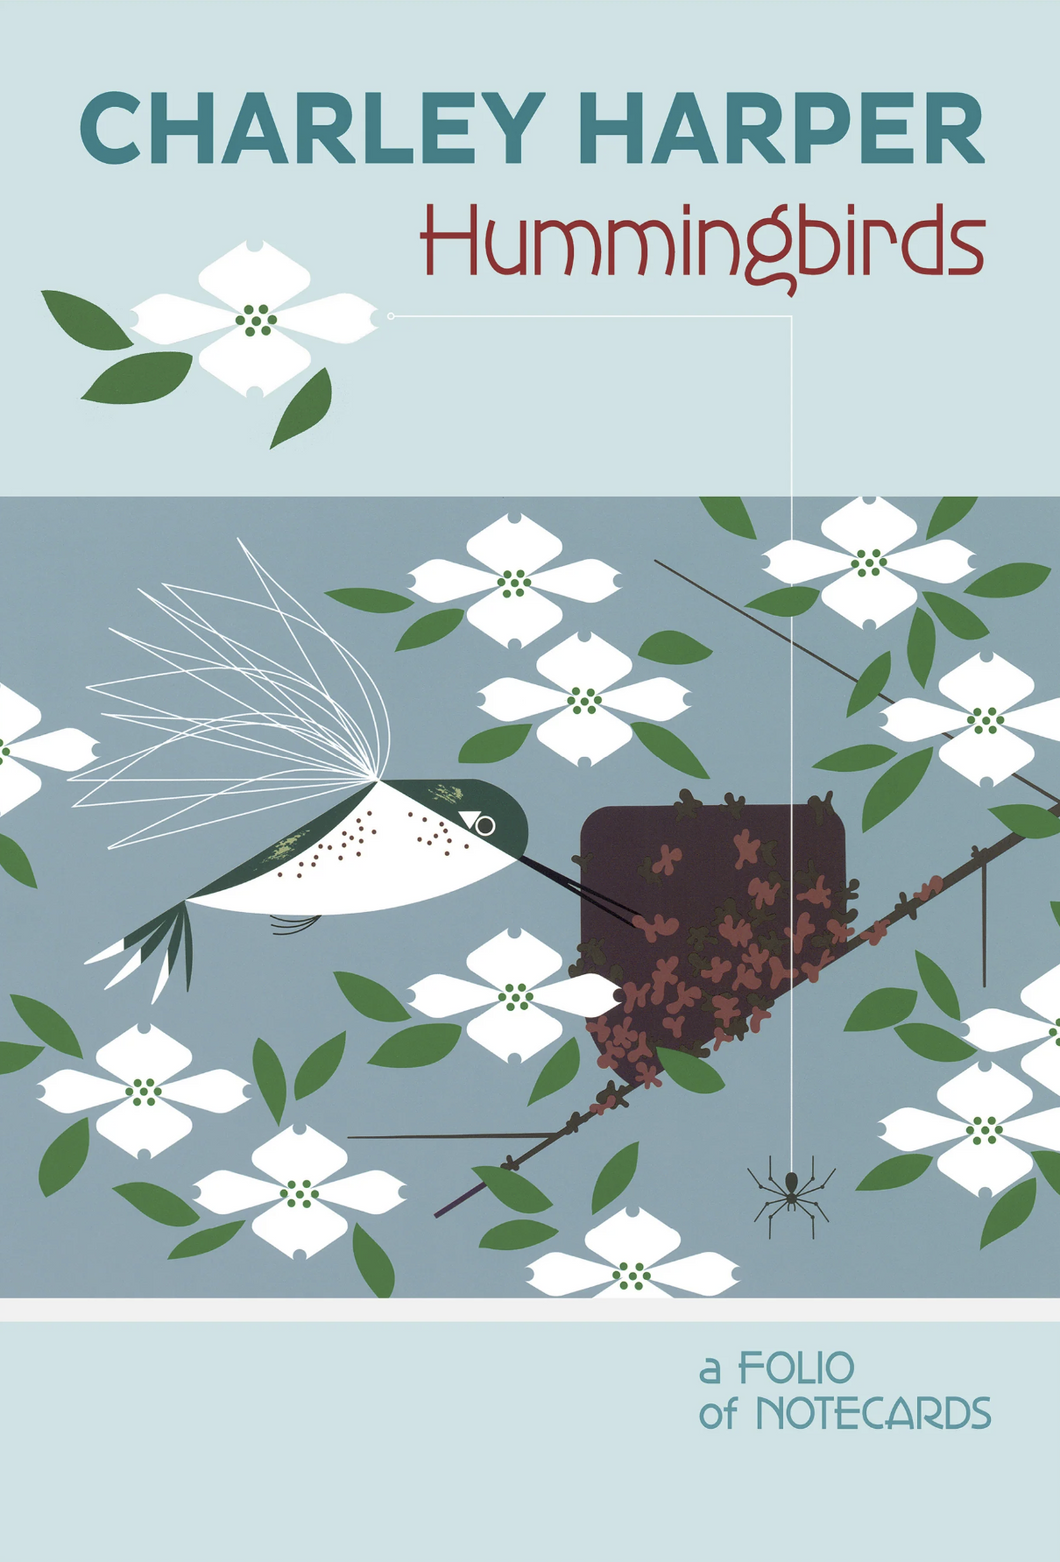 Charley Harper: Hummingbirds Notecard Folio